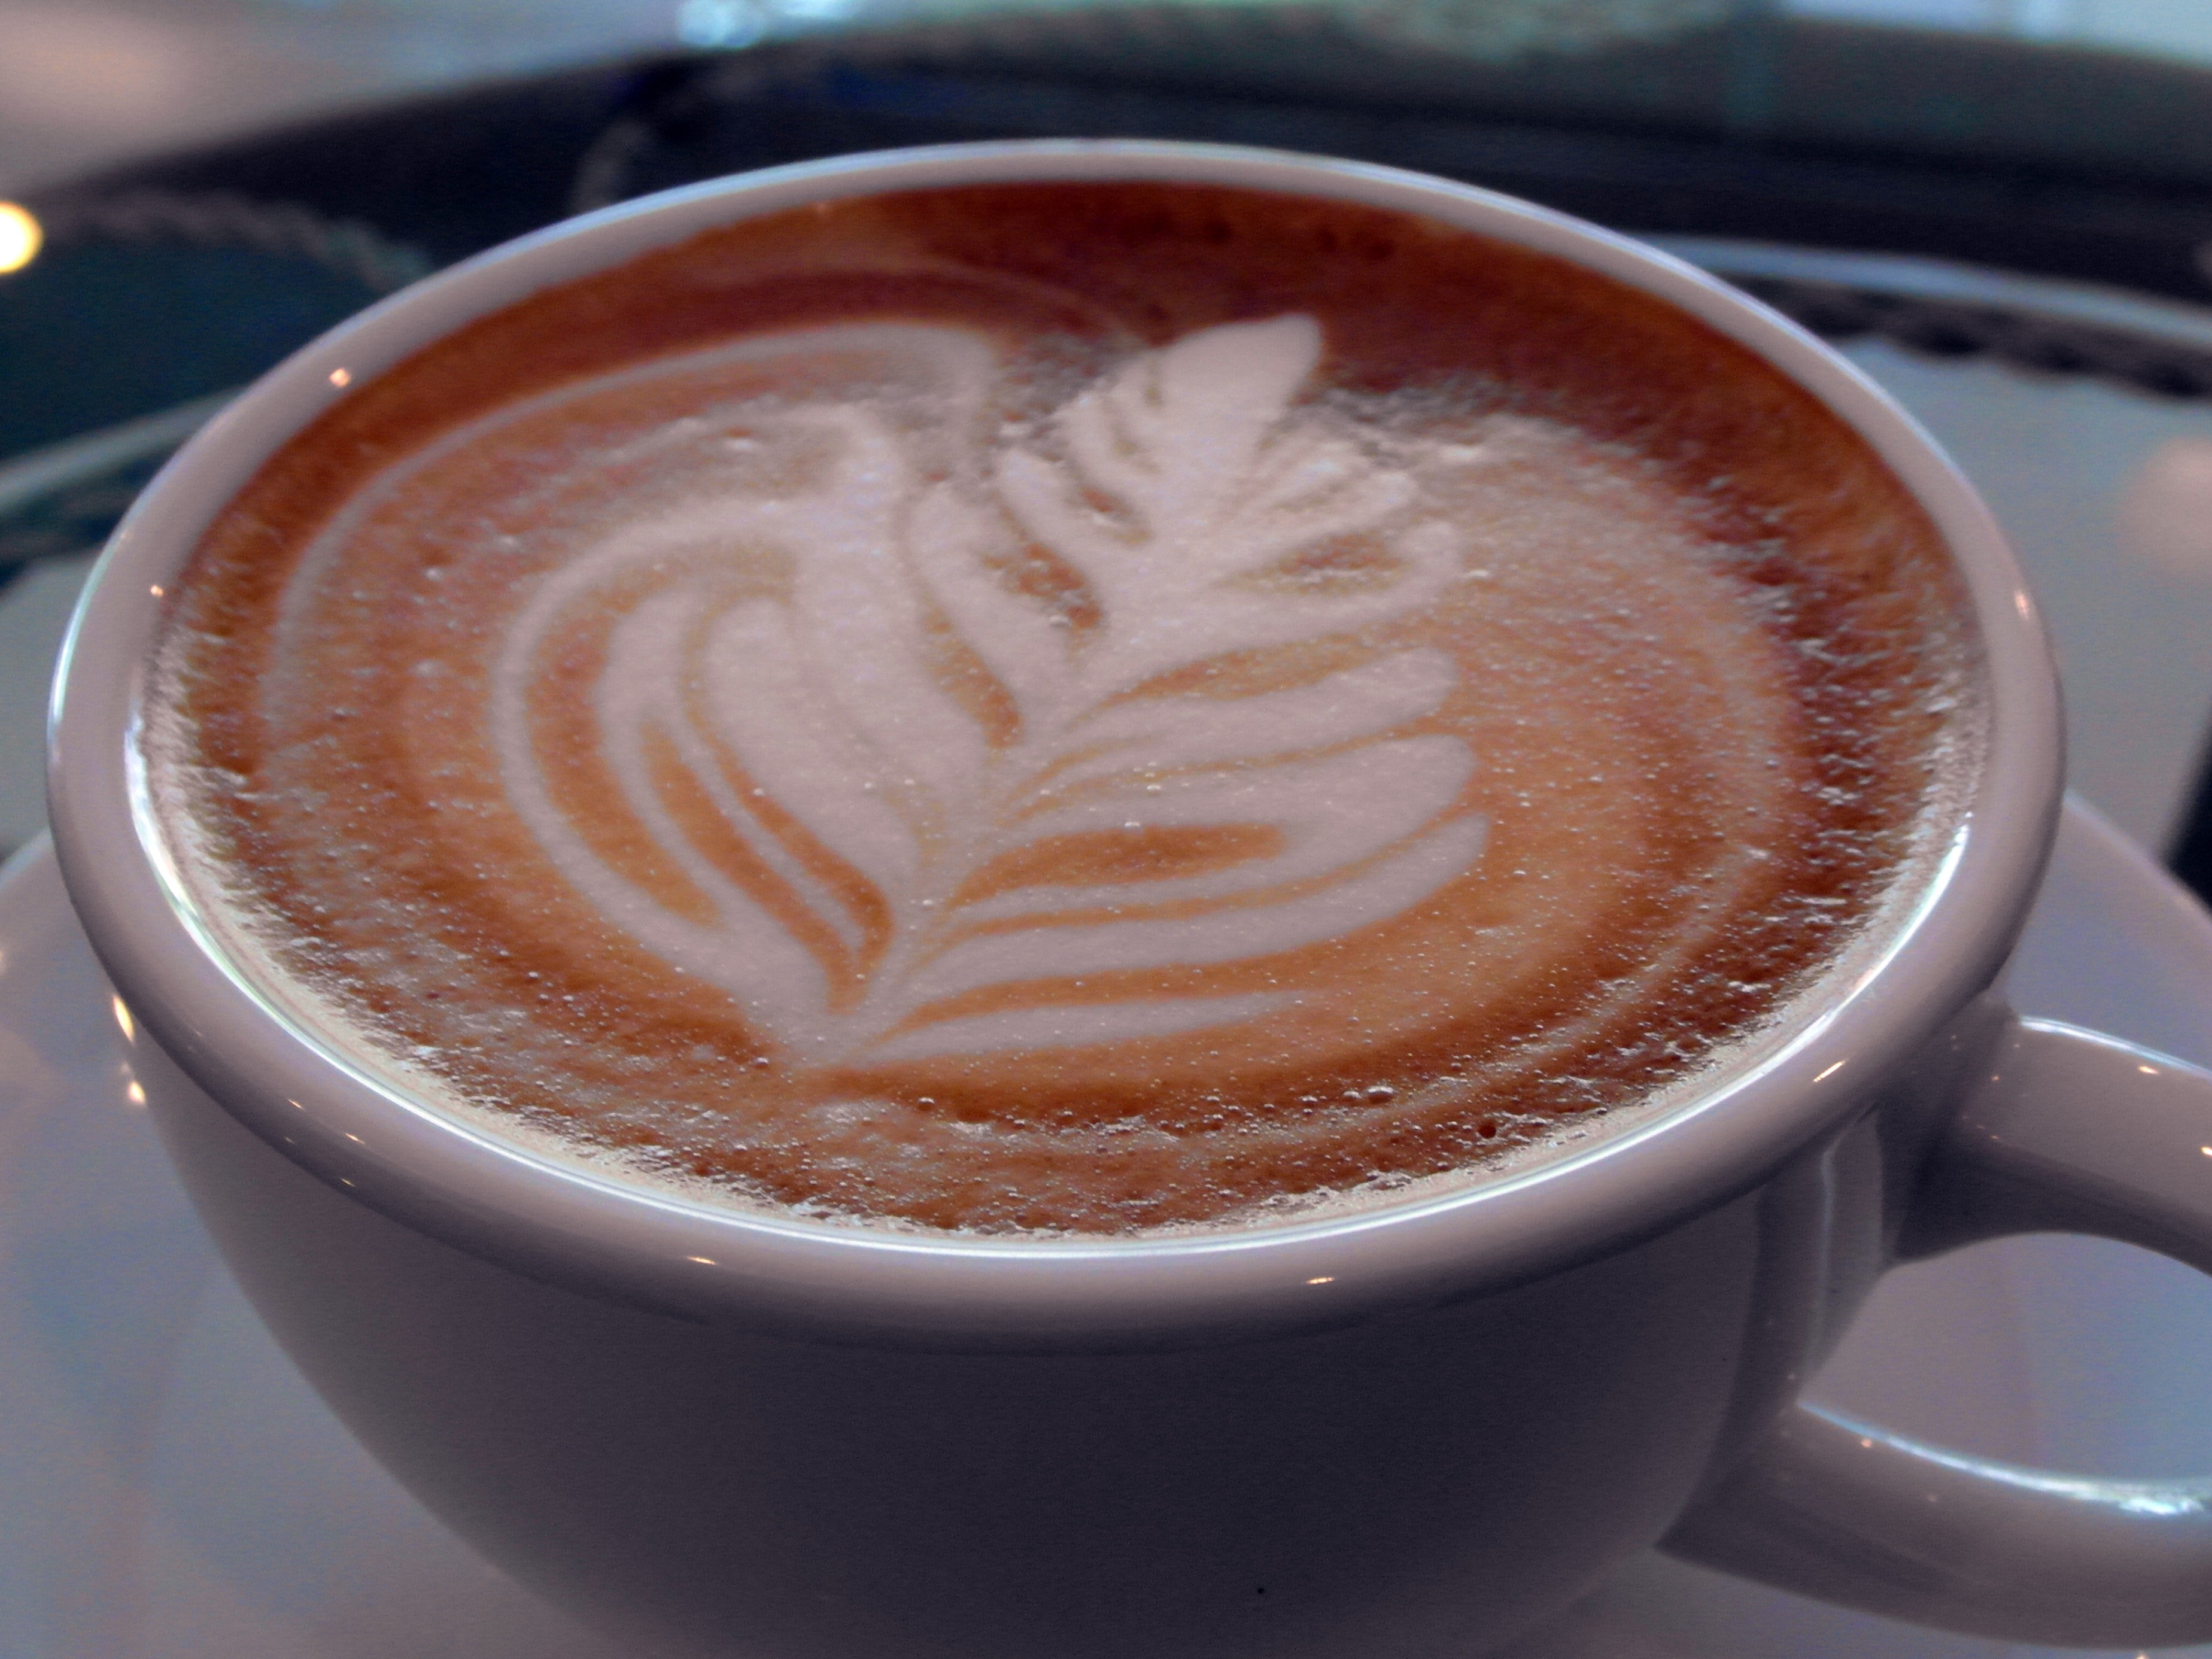 Coffee art leaf design photo